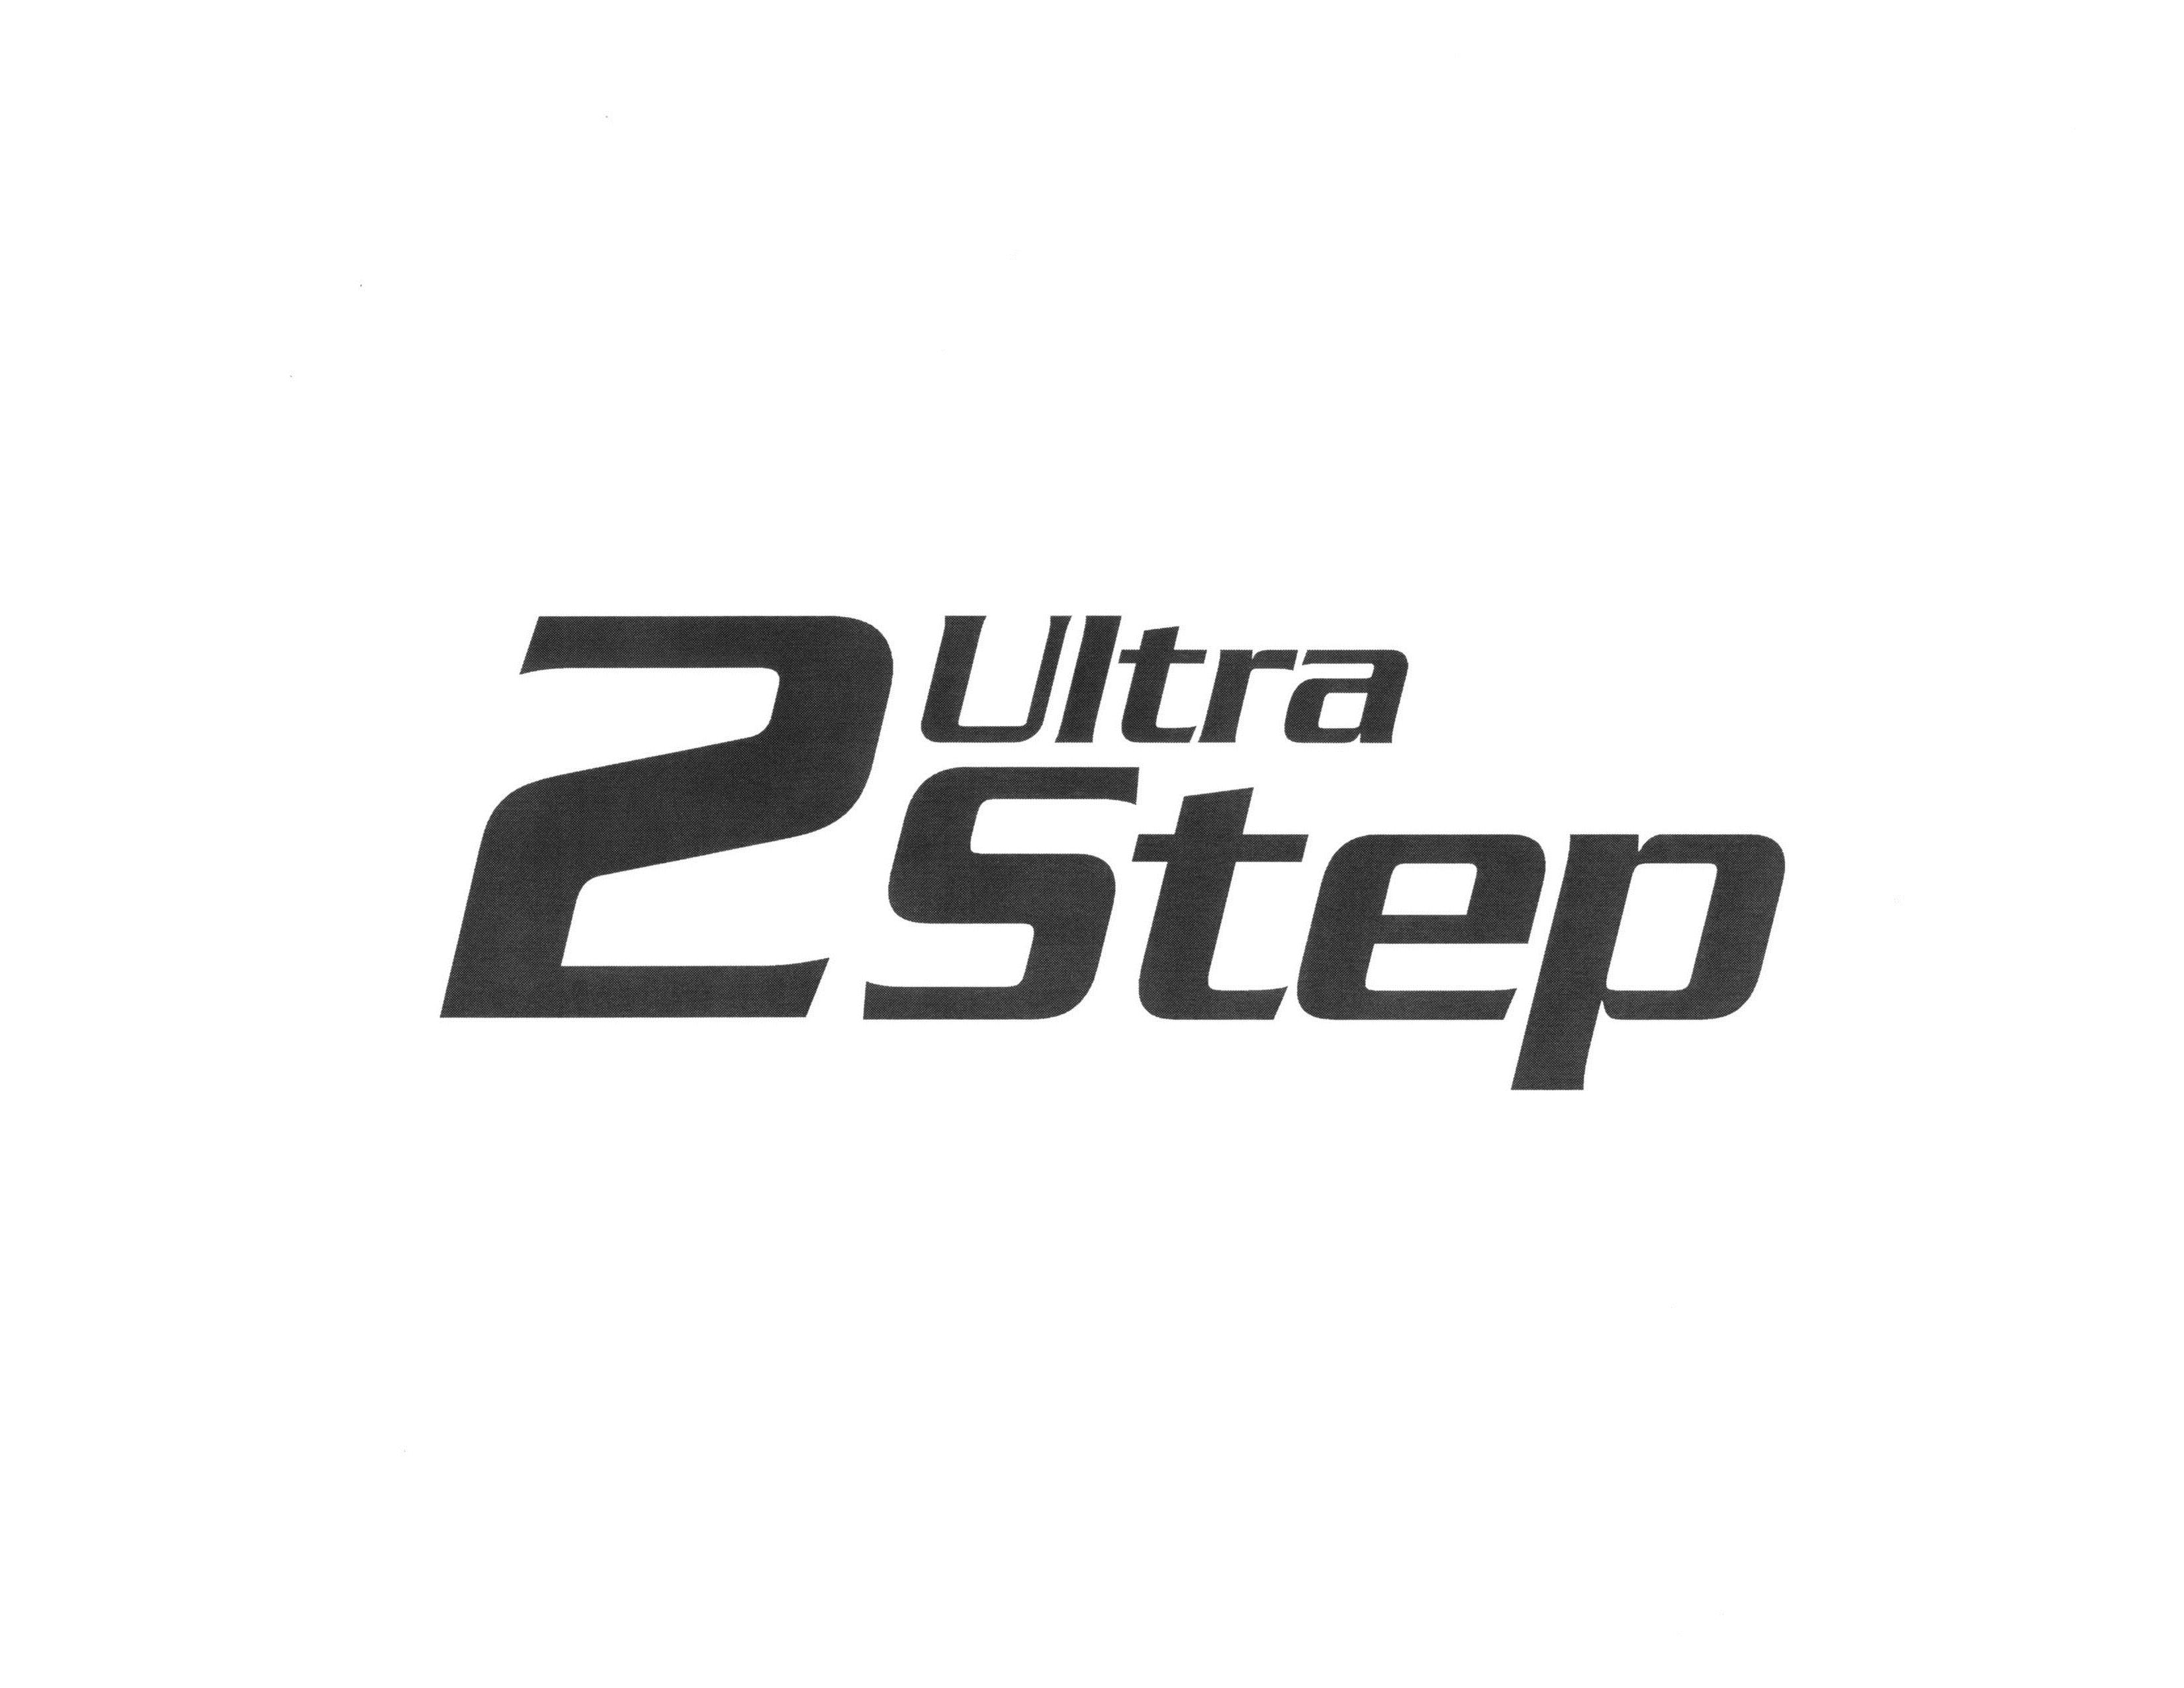  ULTRA 2 STEP